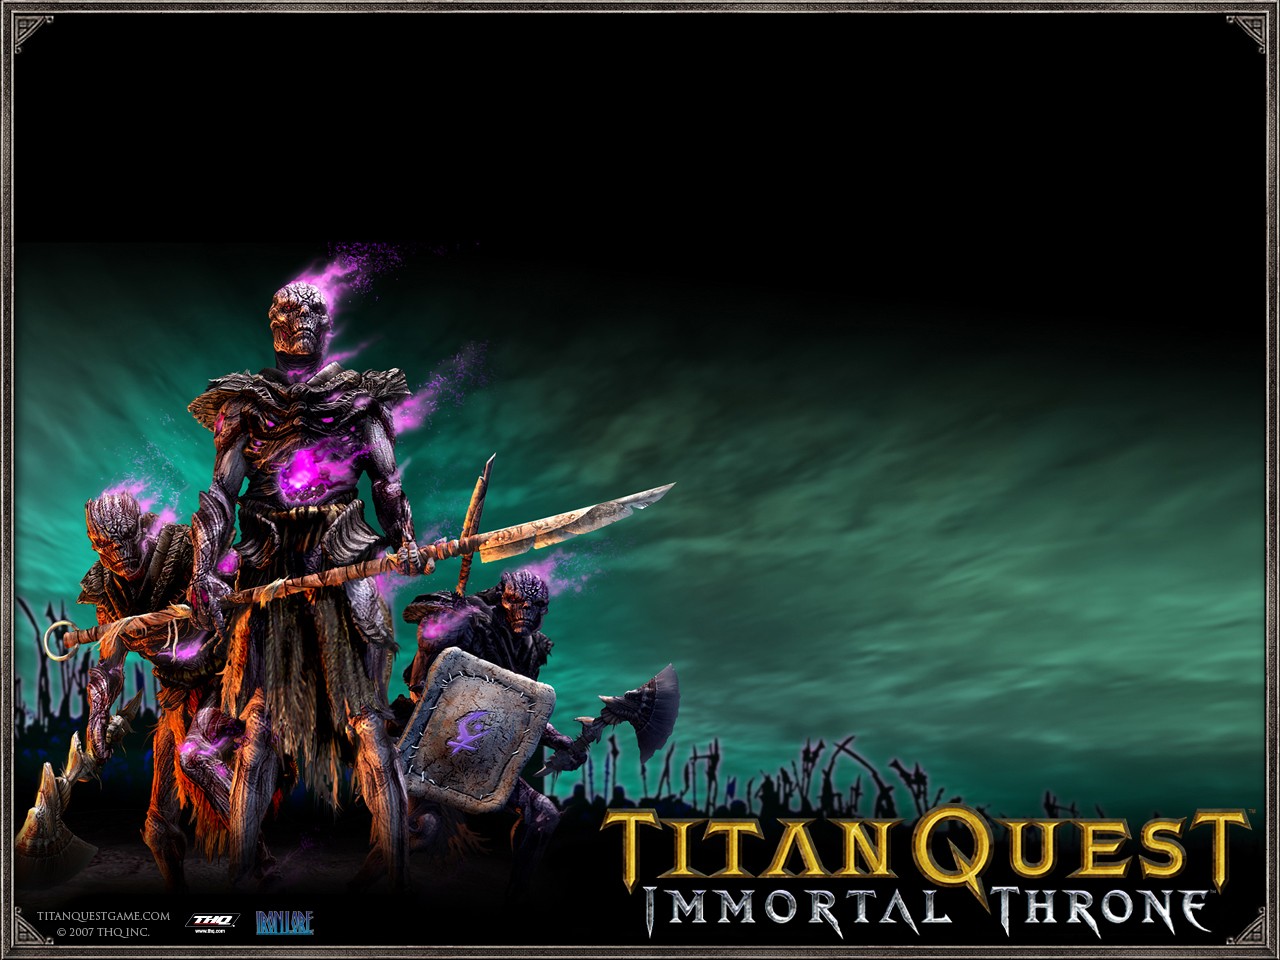 General 1280x960 video games Titan Quest fantasy art 2007 (Year) PC gaming creature